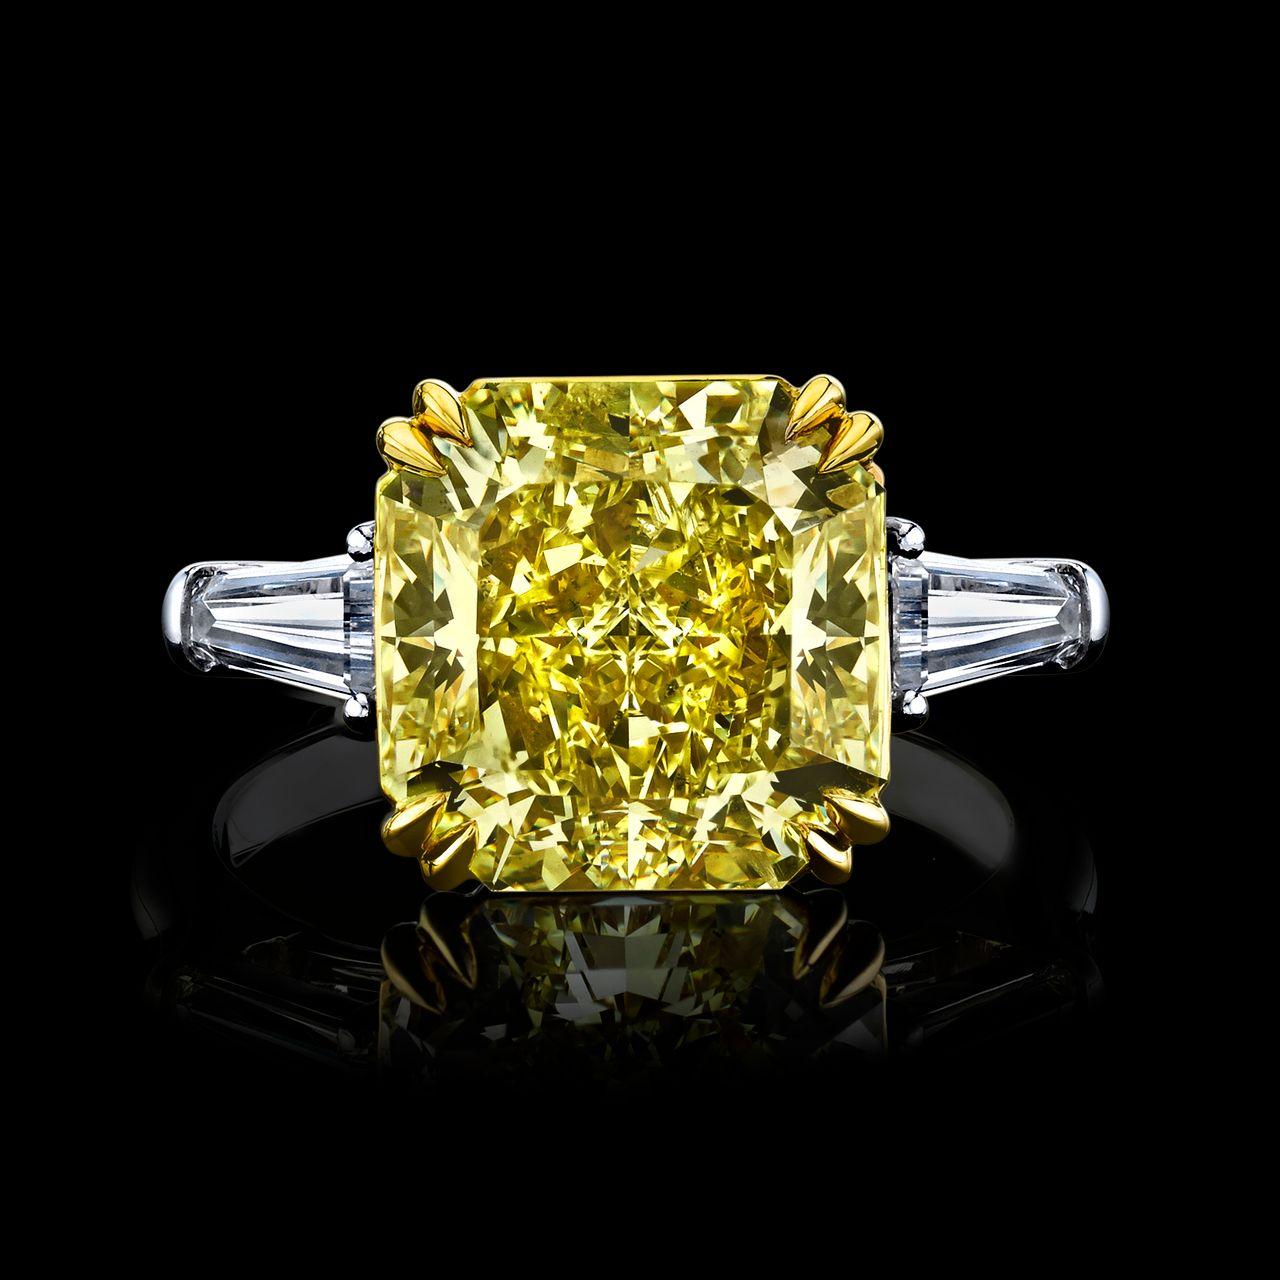 Modern GIA Certified 5.05 Carat Fancy Yellow Radiant Cut Diamond Ring VVS2 Clarity For Sale